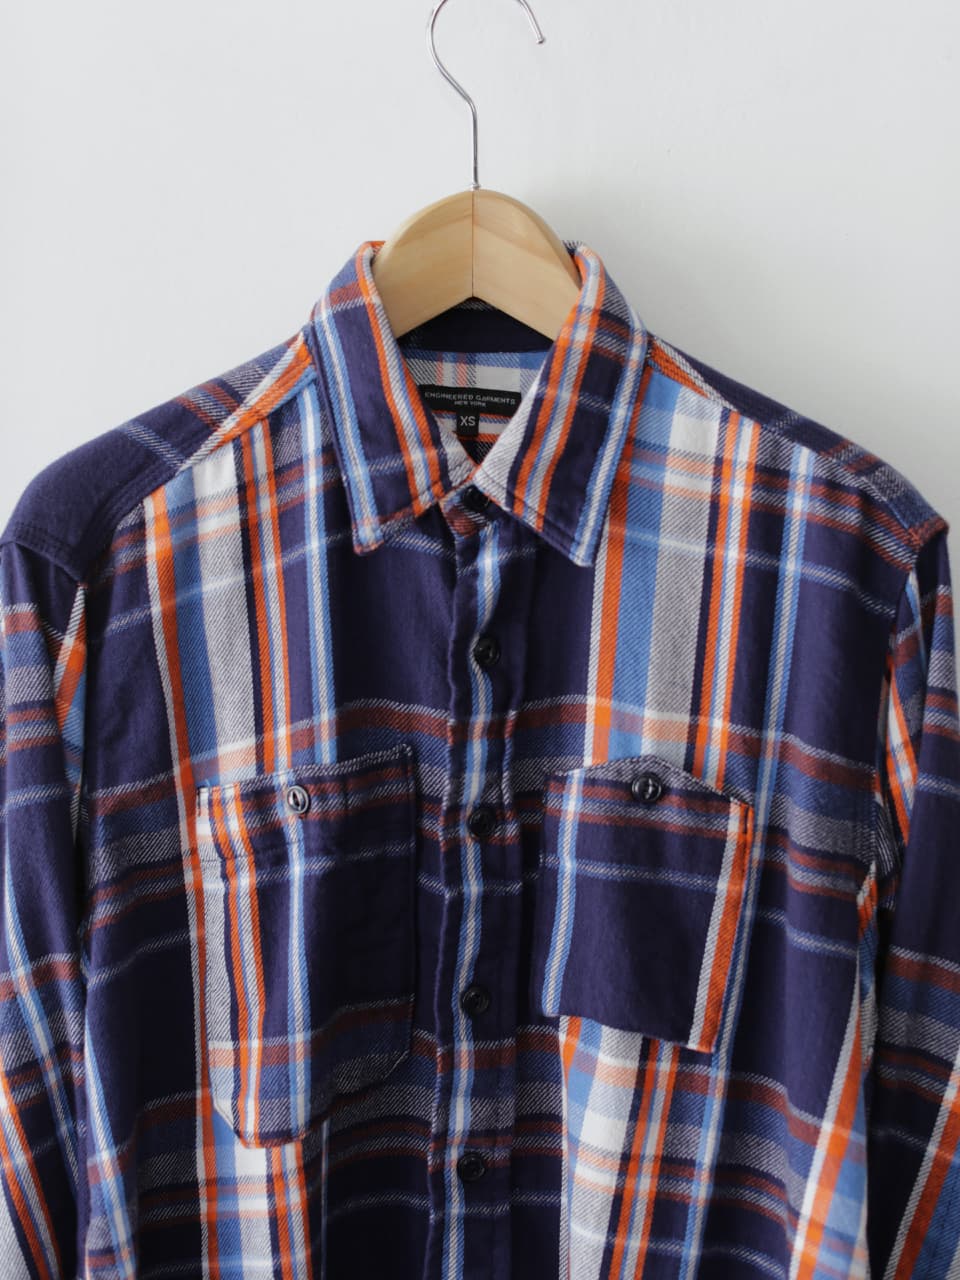 Work Shirt - Twill Plaid Navy/Orange/Lt.Blue 4